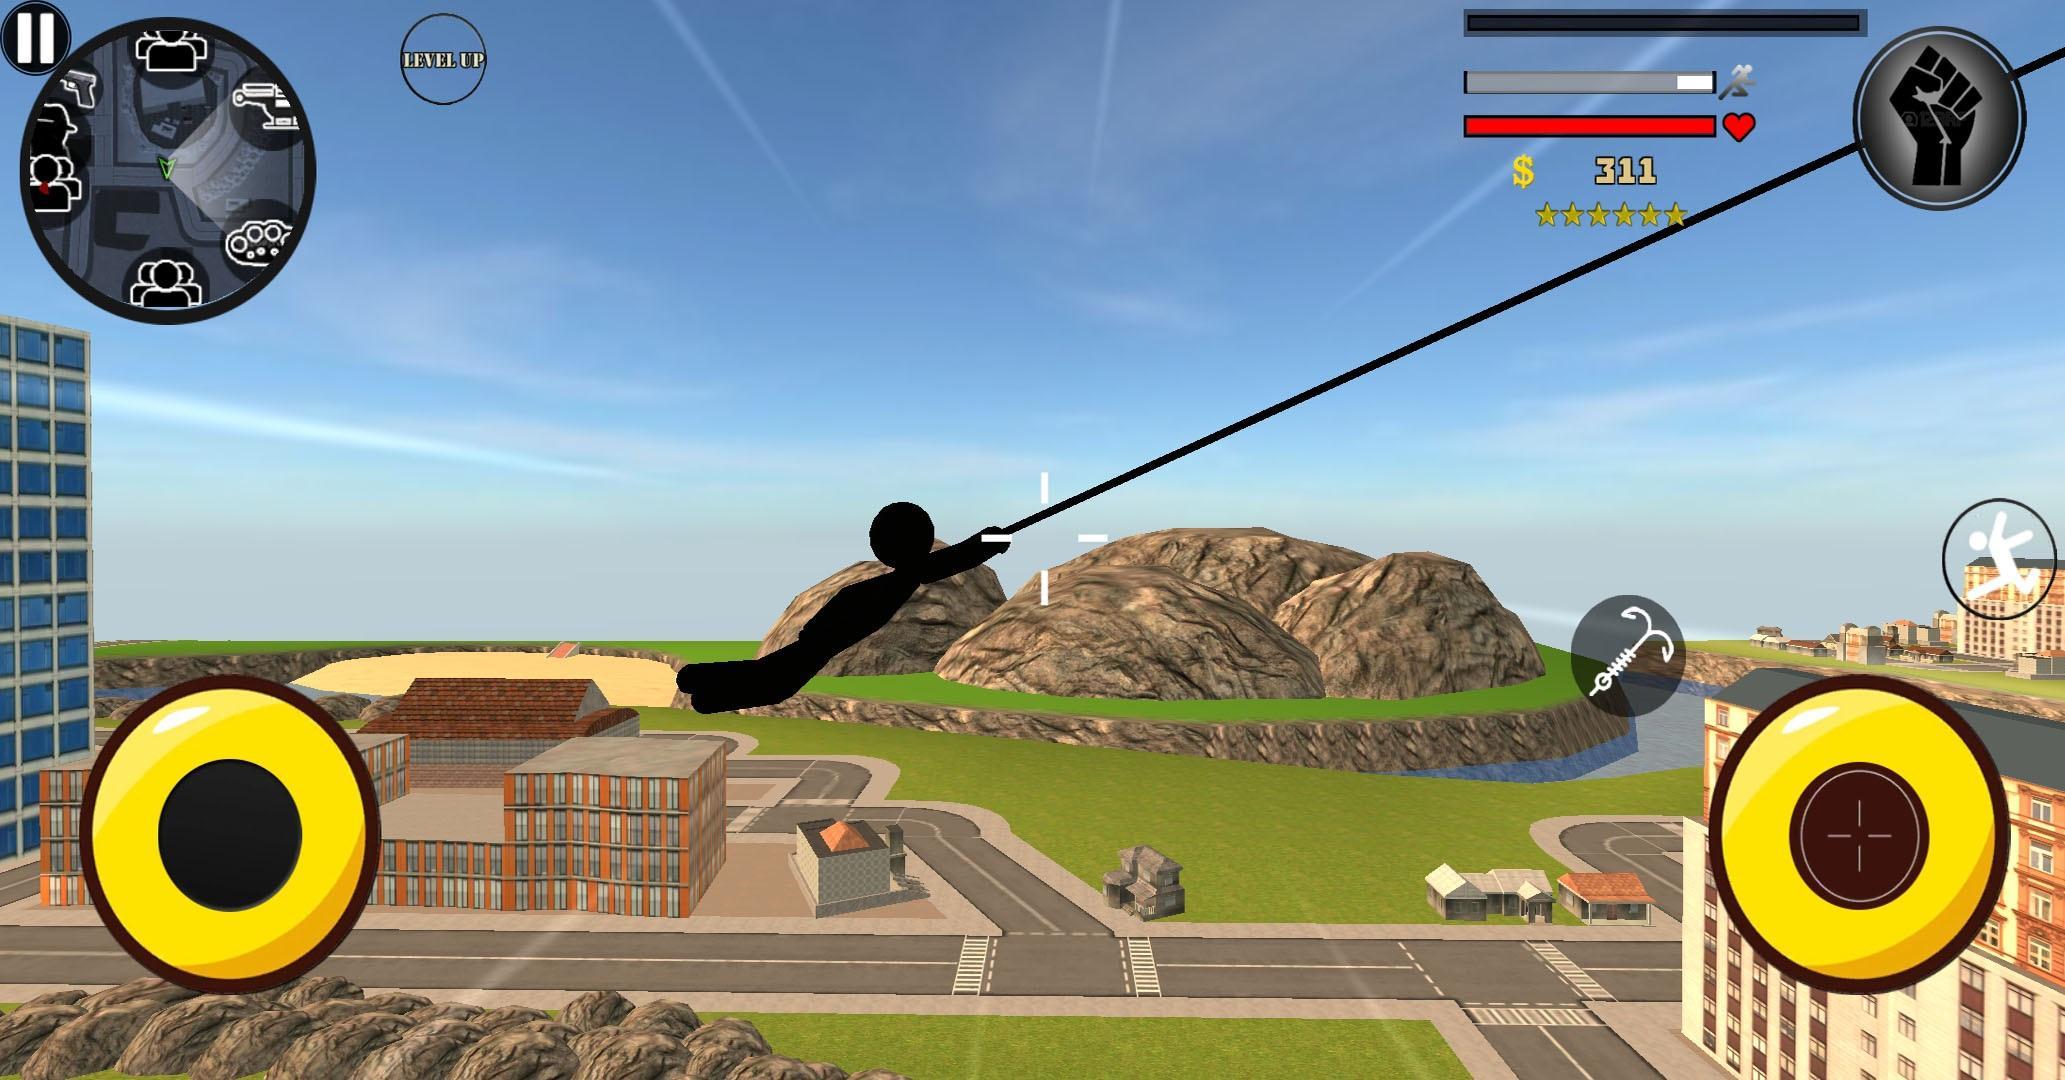 Screenshot 1 of Stick Fight Rope Hero 3 Vice Town: Penembak Polis 3.0